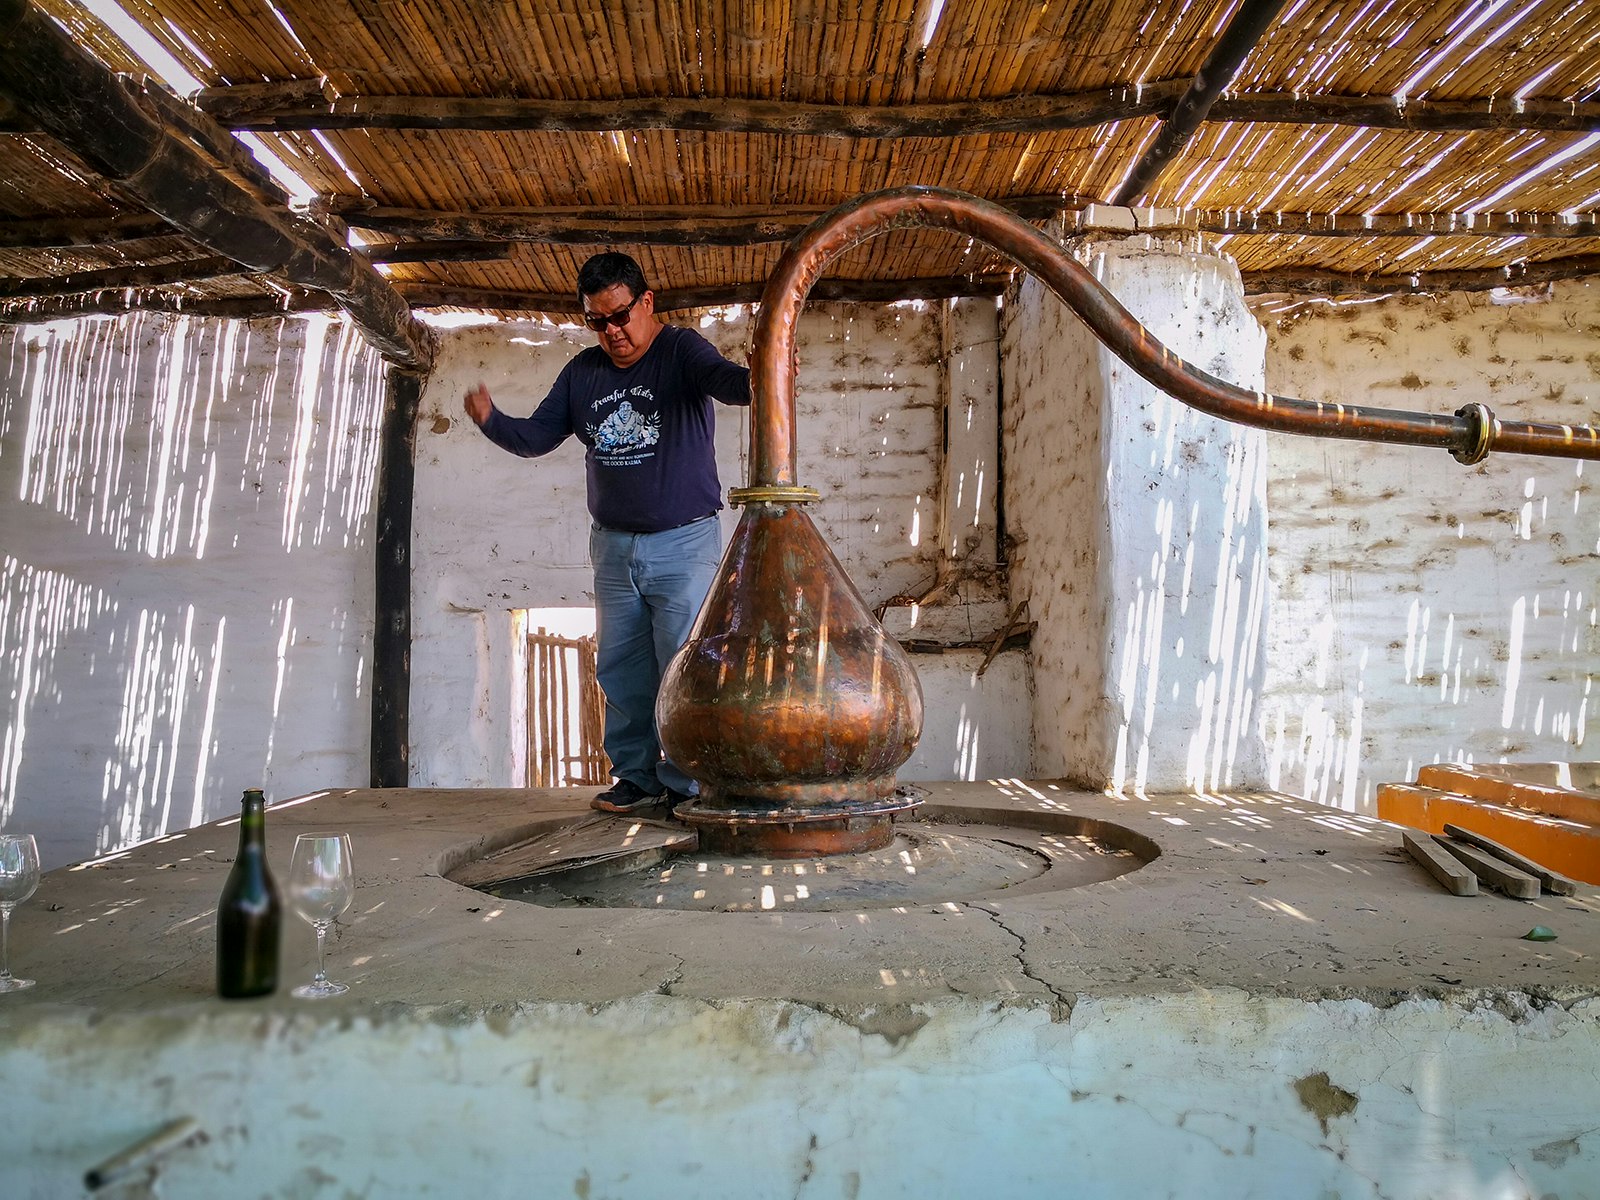 A man walks around a small copper holding tank at a pisco distillery in Peru